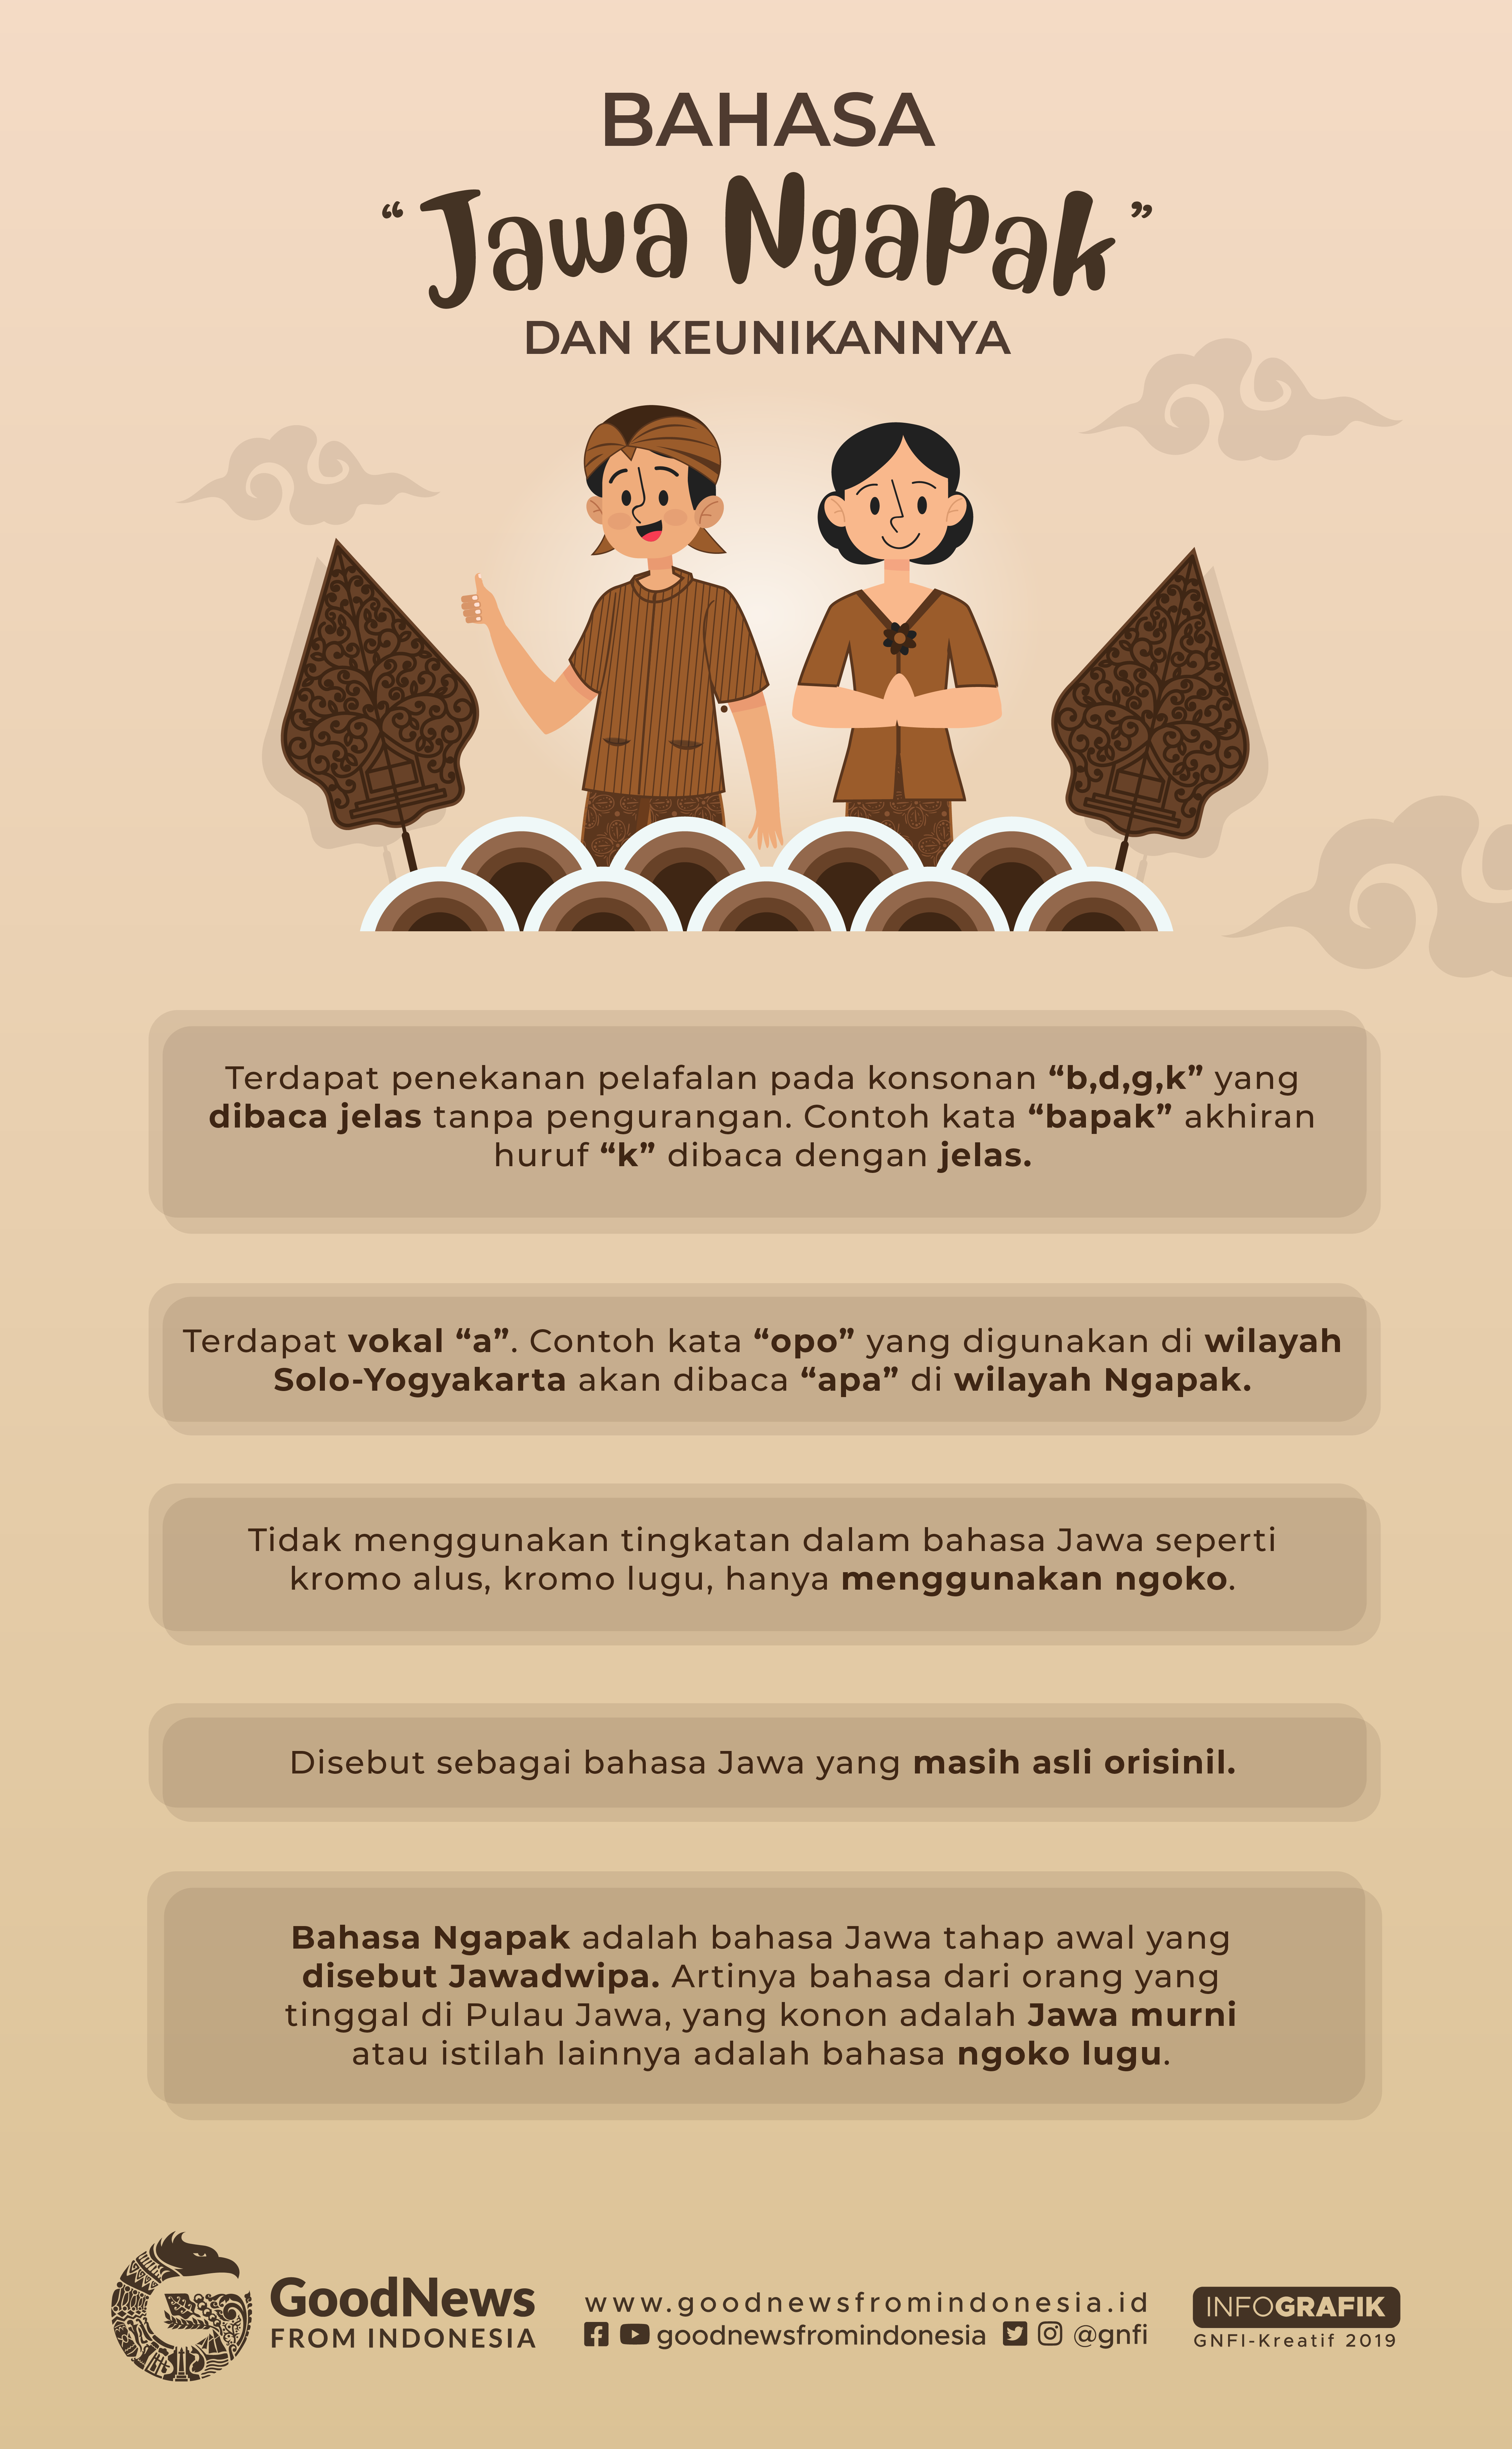 Uniknya Bahasa Ngapak Good News From Indonesia